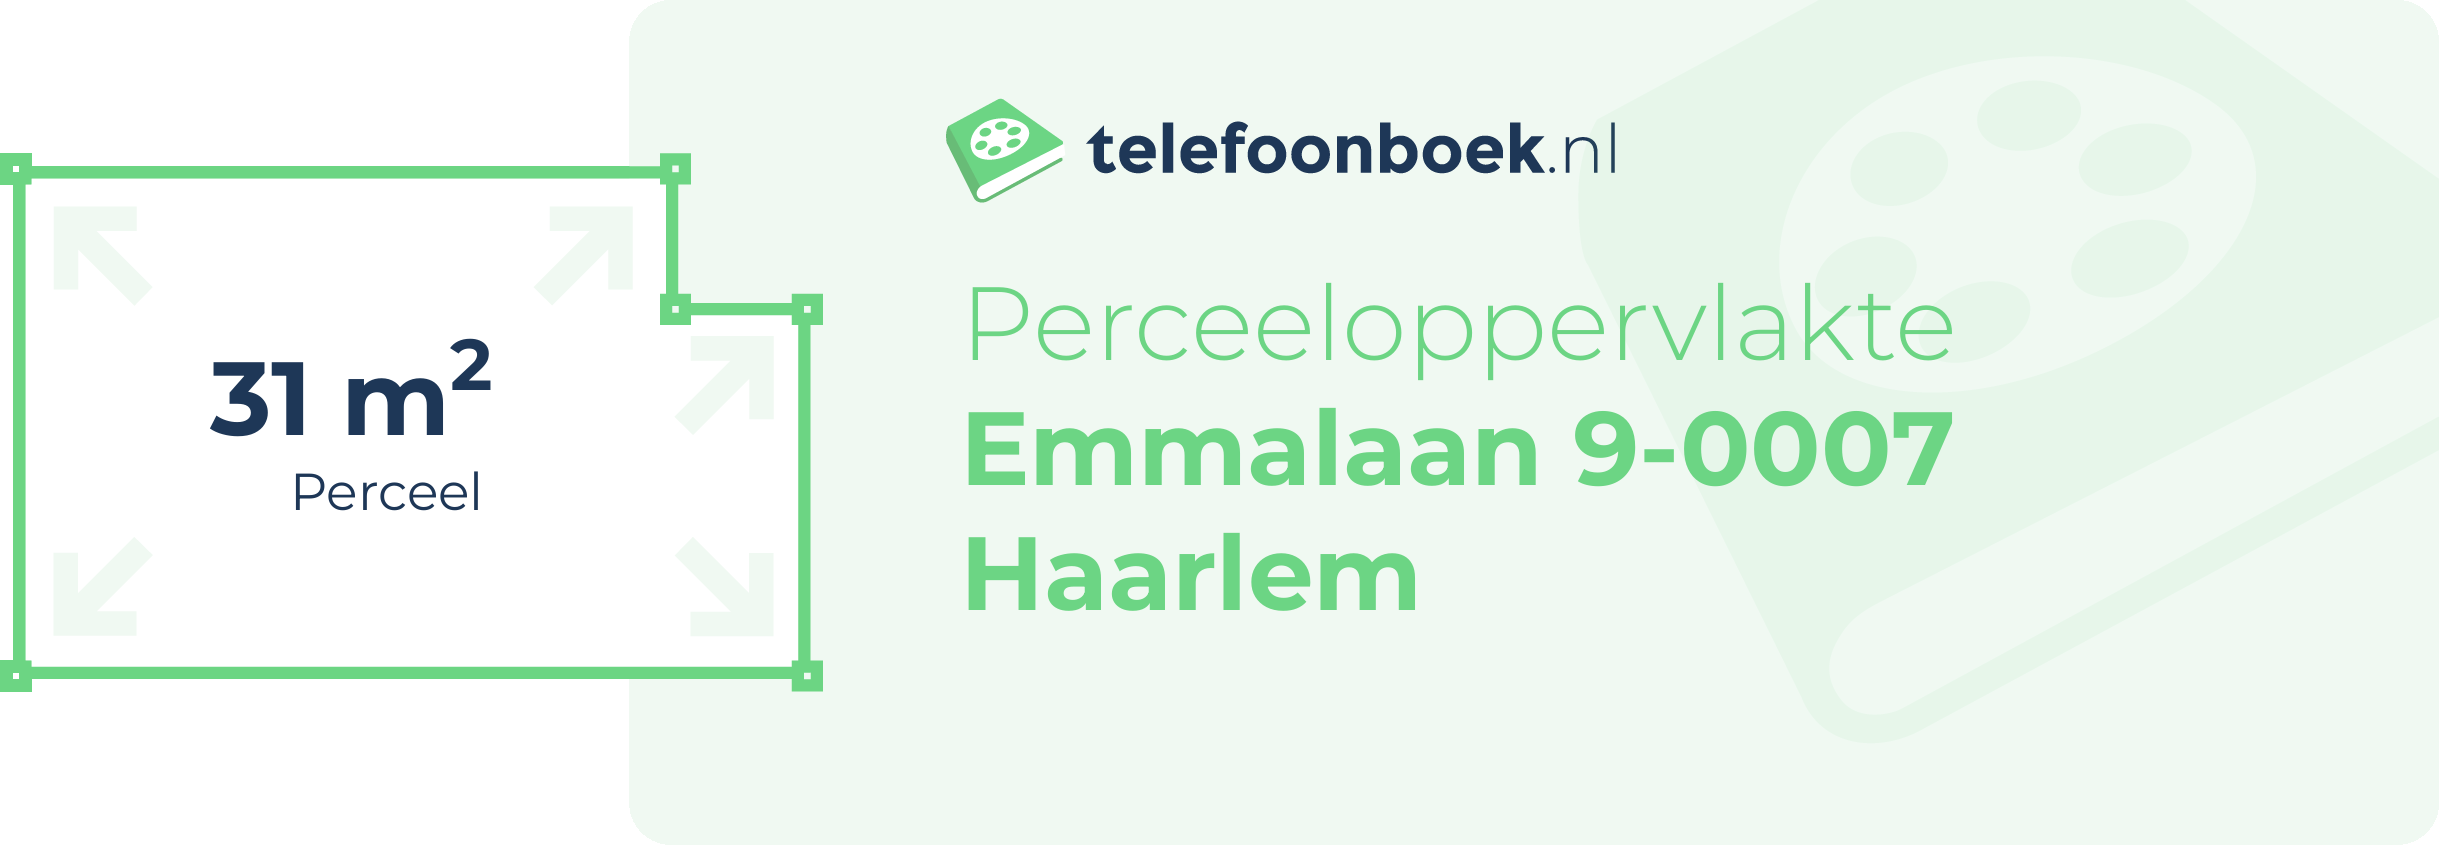 Perceeloppervlakte Emmalaan 9-0007 Haarlem